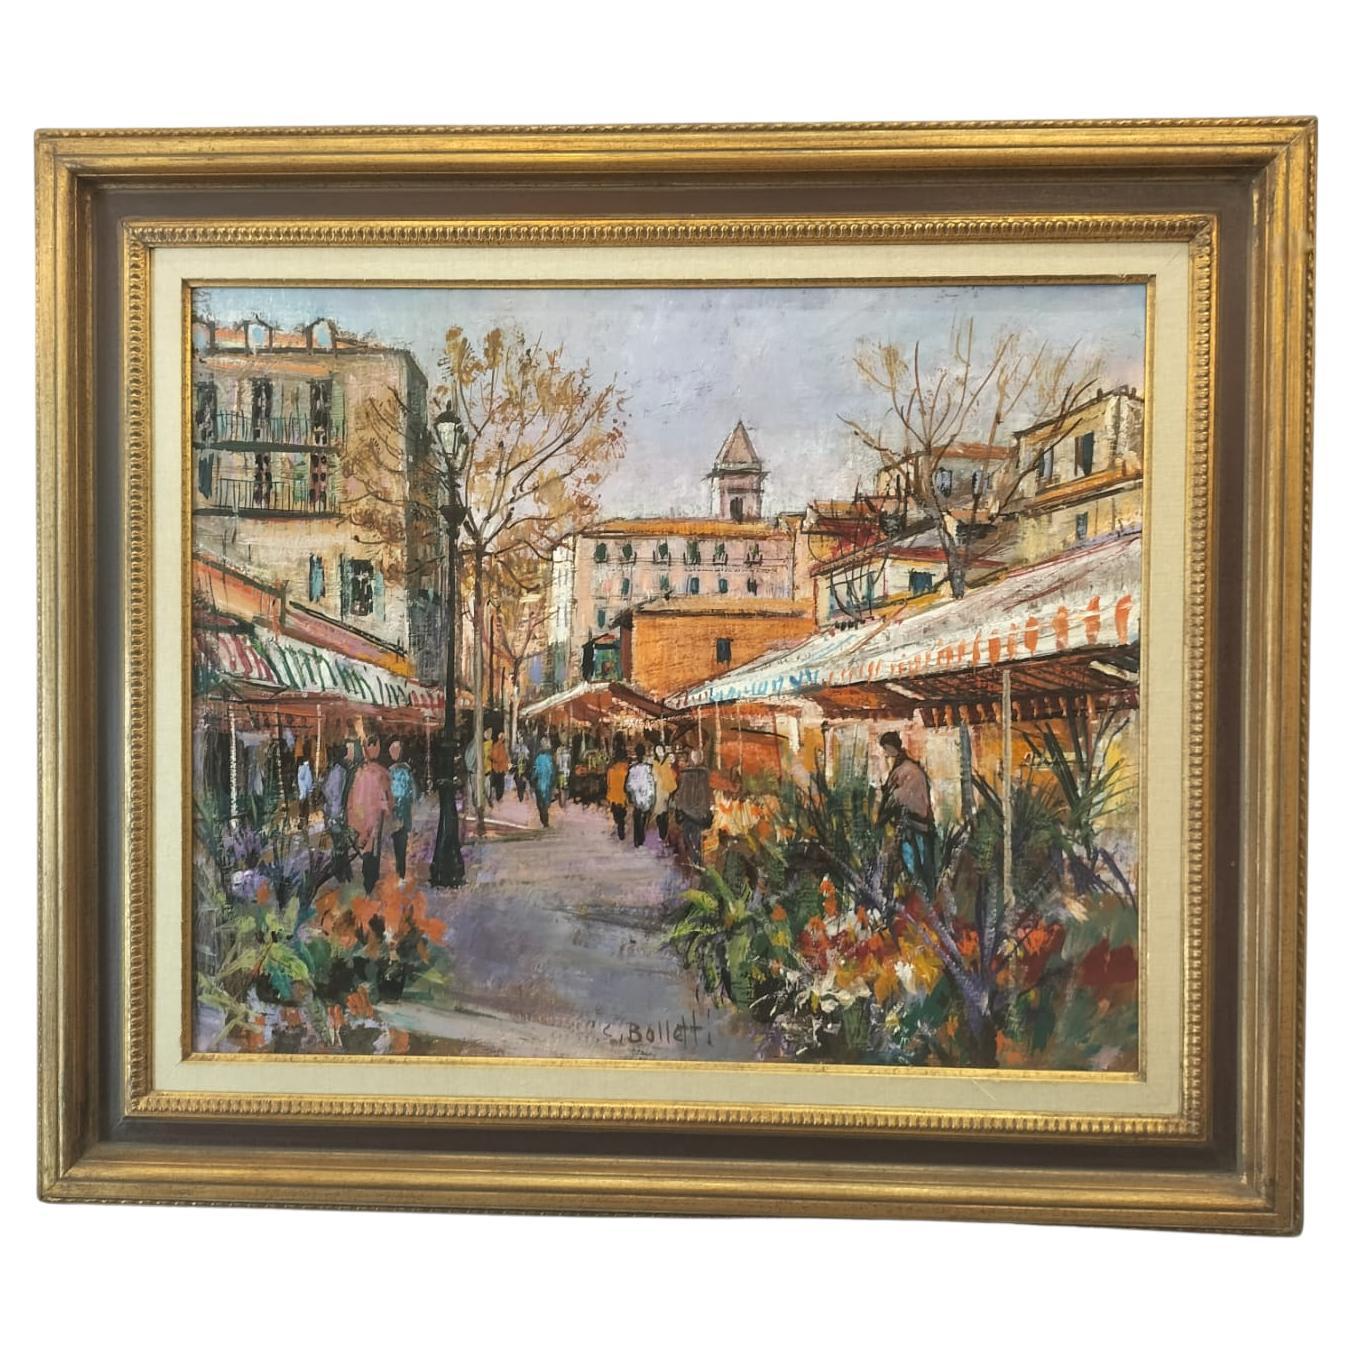 Modern Oil-on-Canvas Painting of a Flower Market by Cesar Boletti (1915-1995)